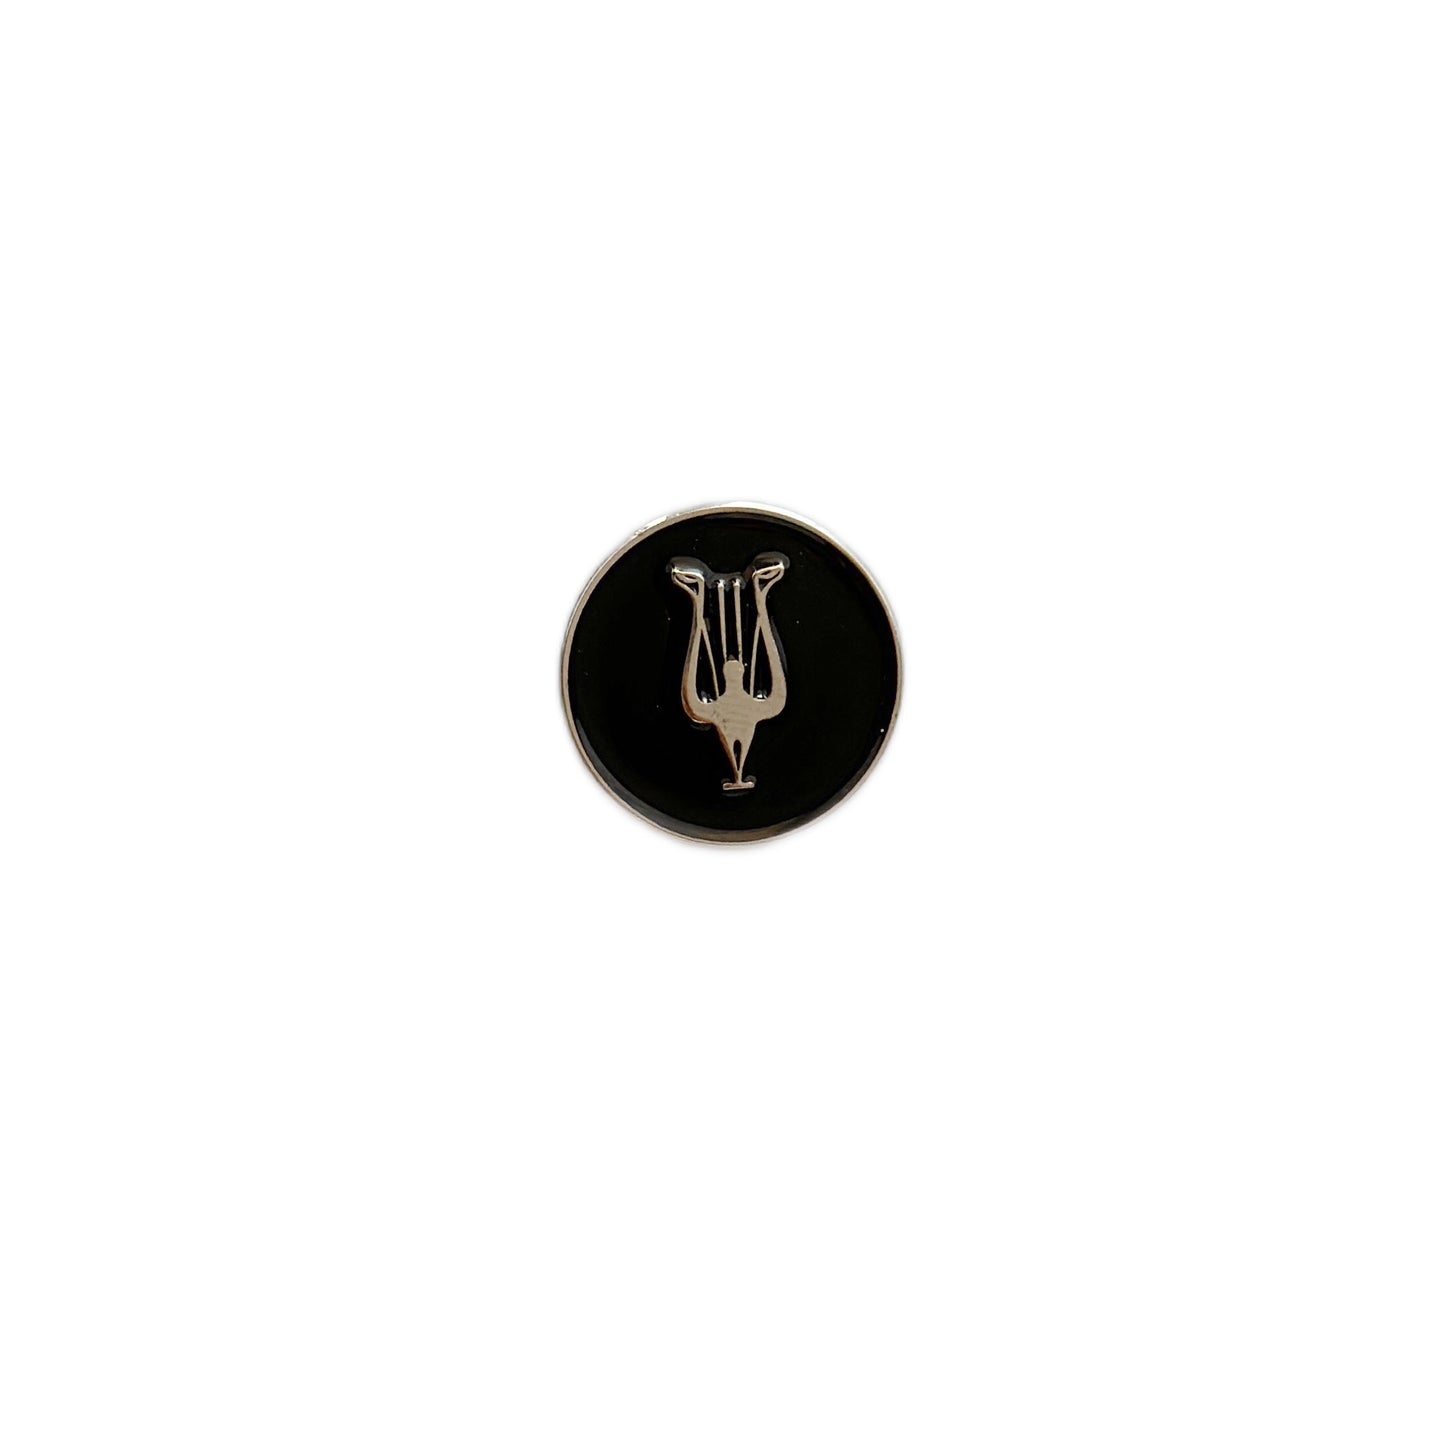 Pins for “Meze audio”